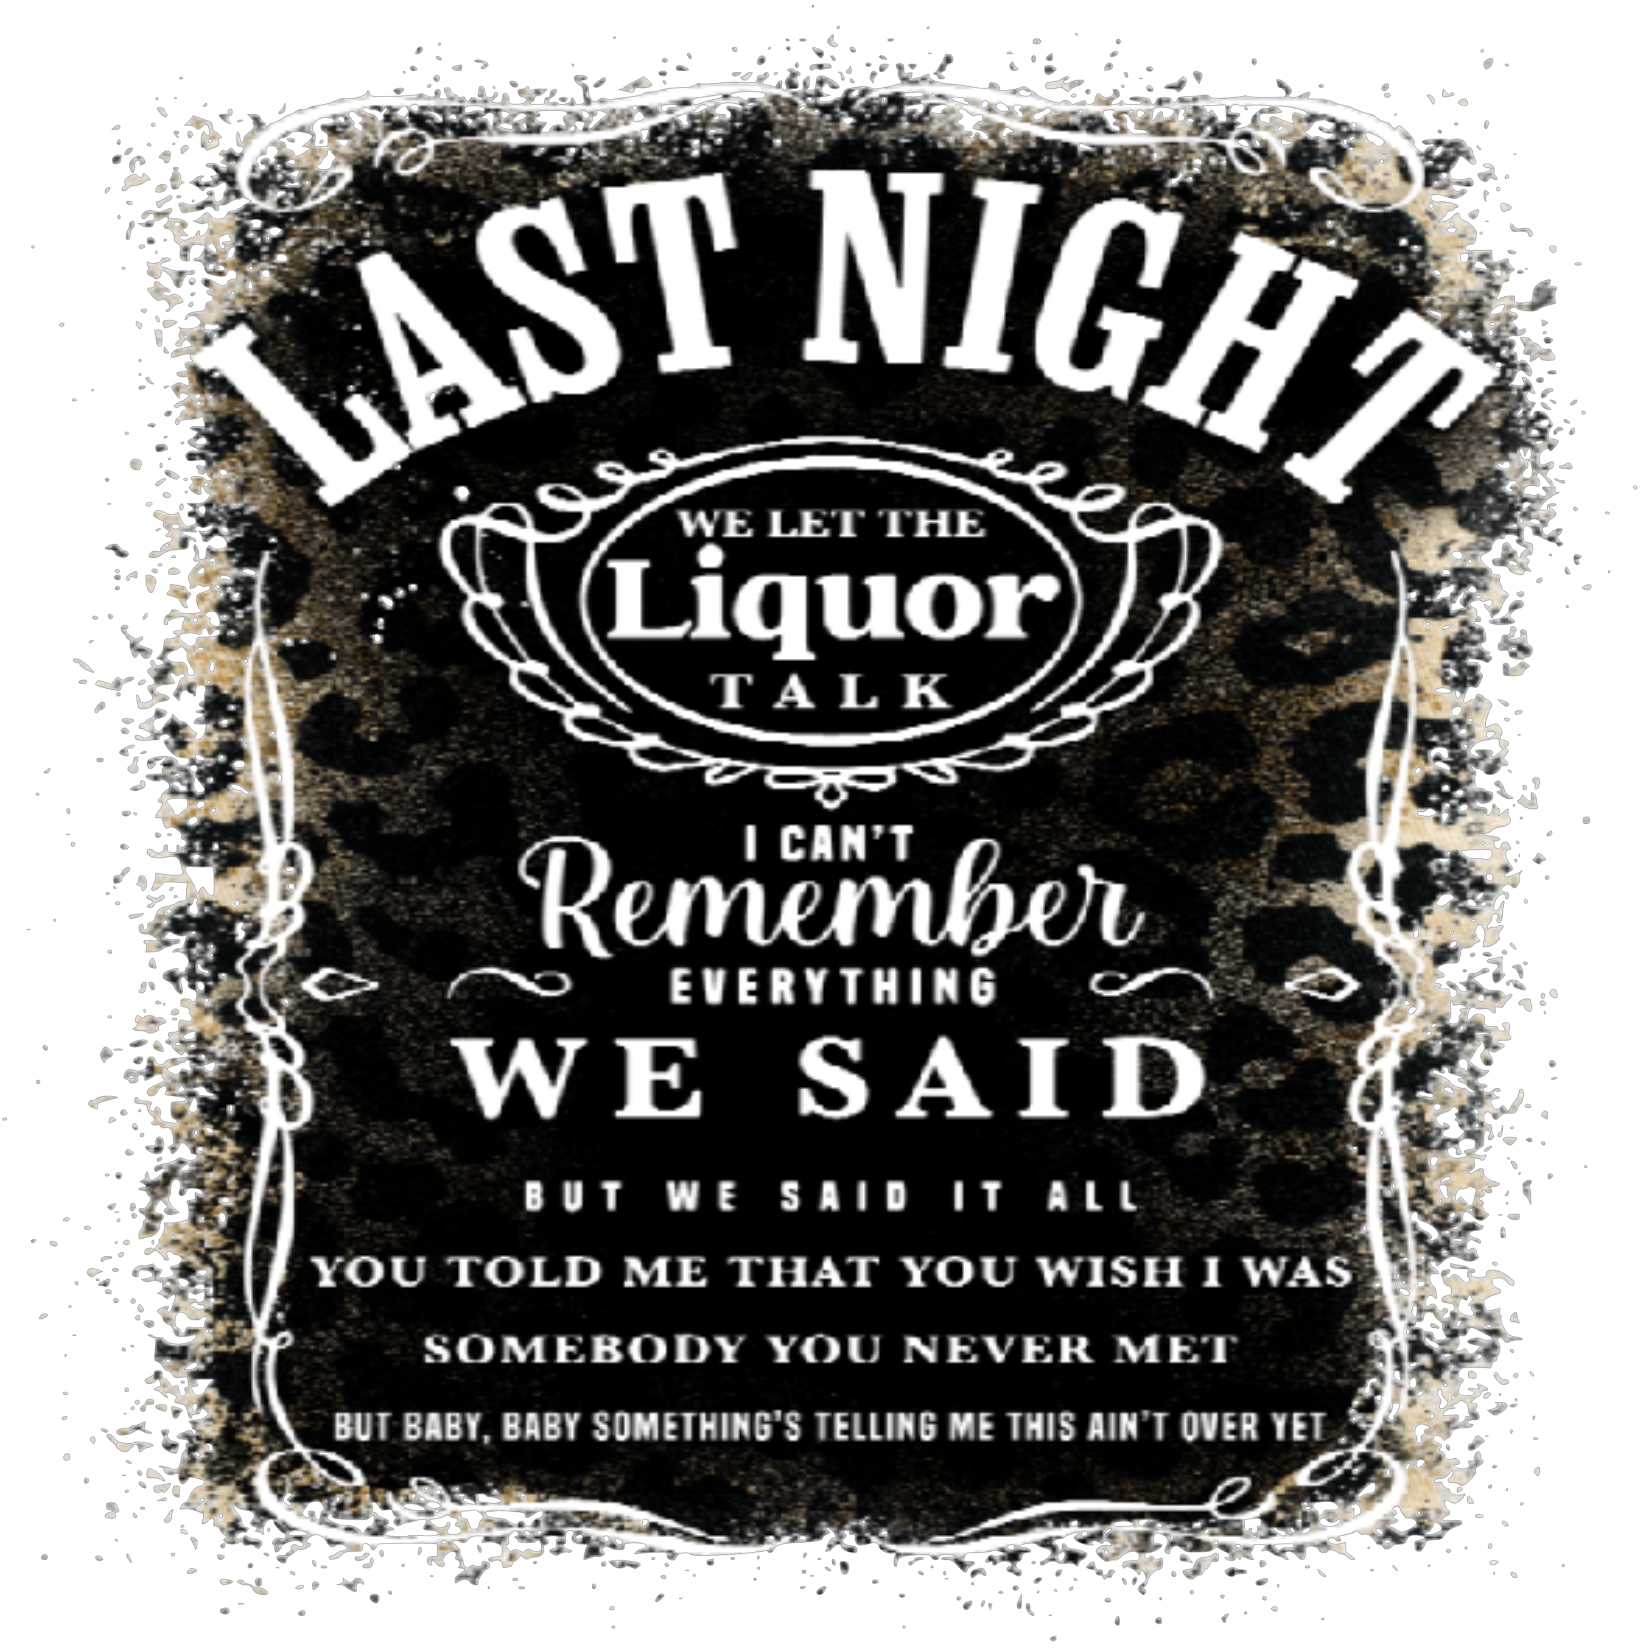 Last Night We Let The Liquor Talk